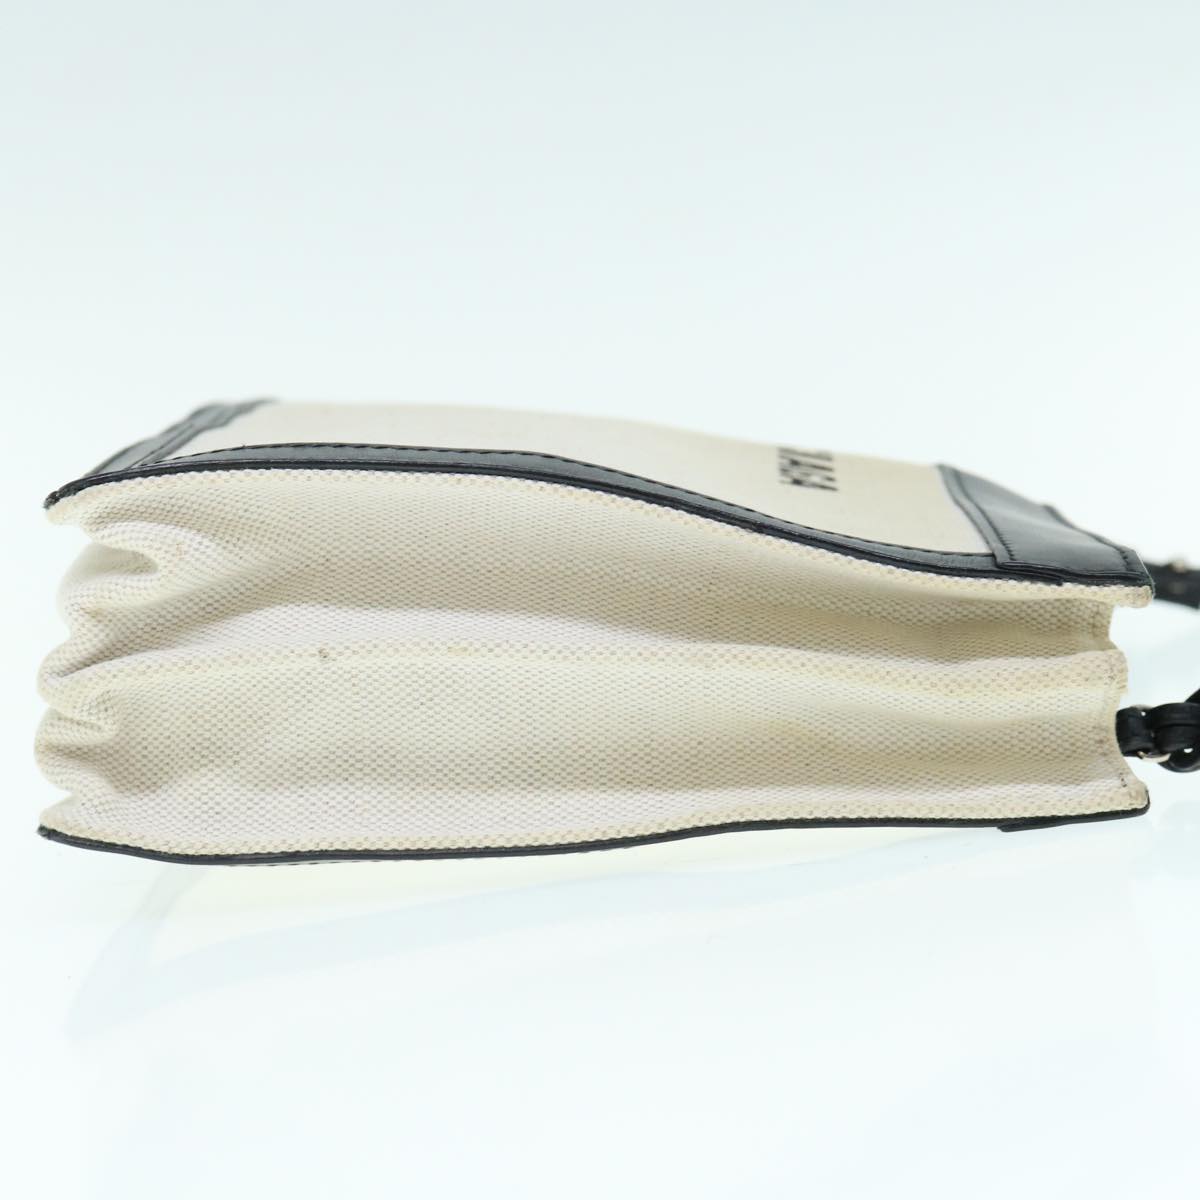 BALENCIAGA Shoulder Bag Canvas White 339937 Auth bs10840